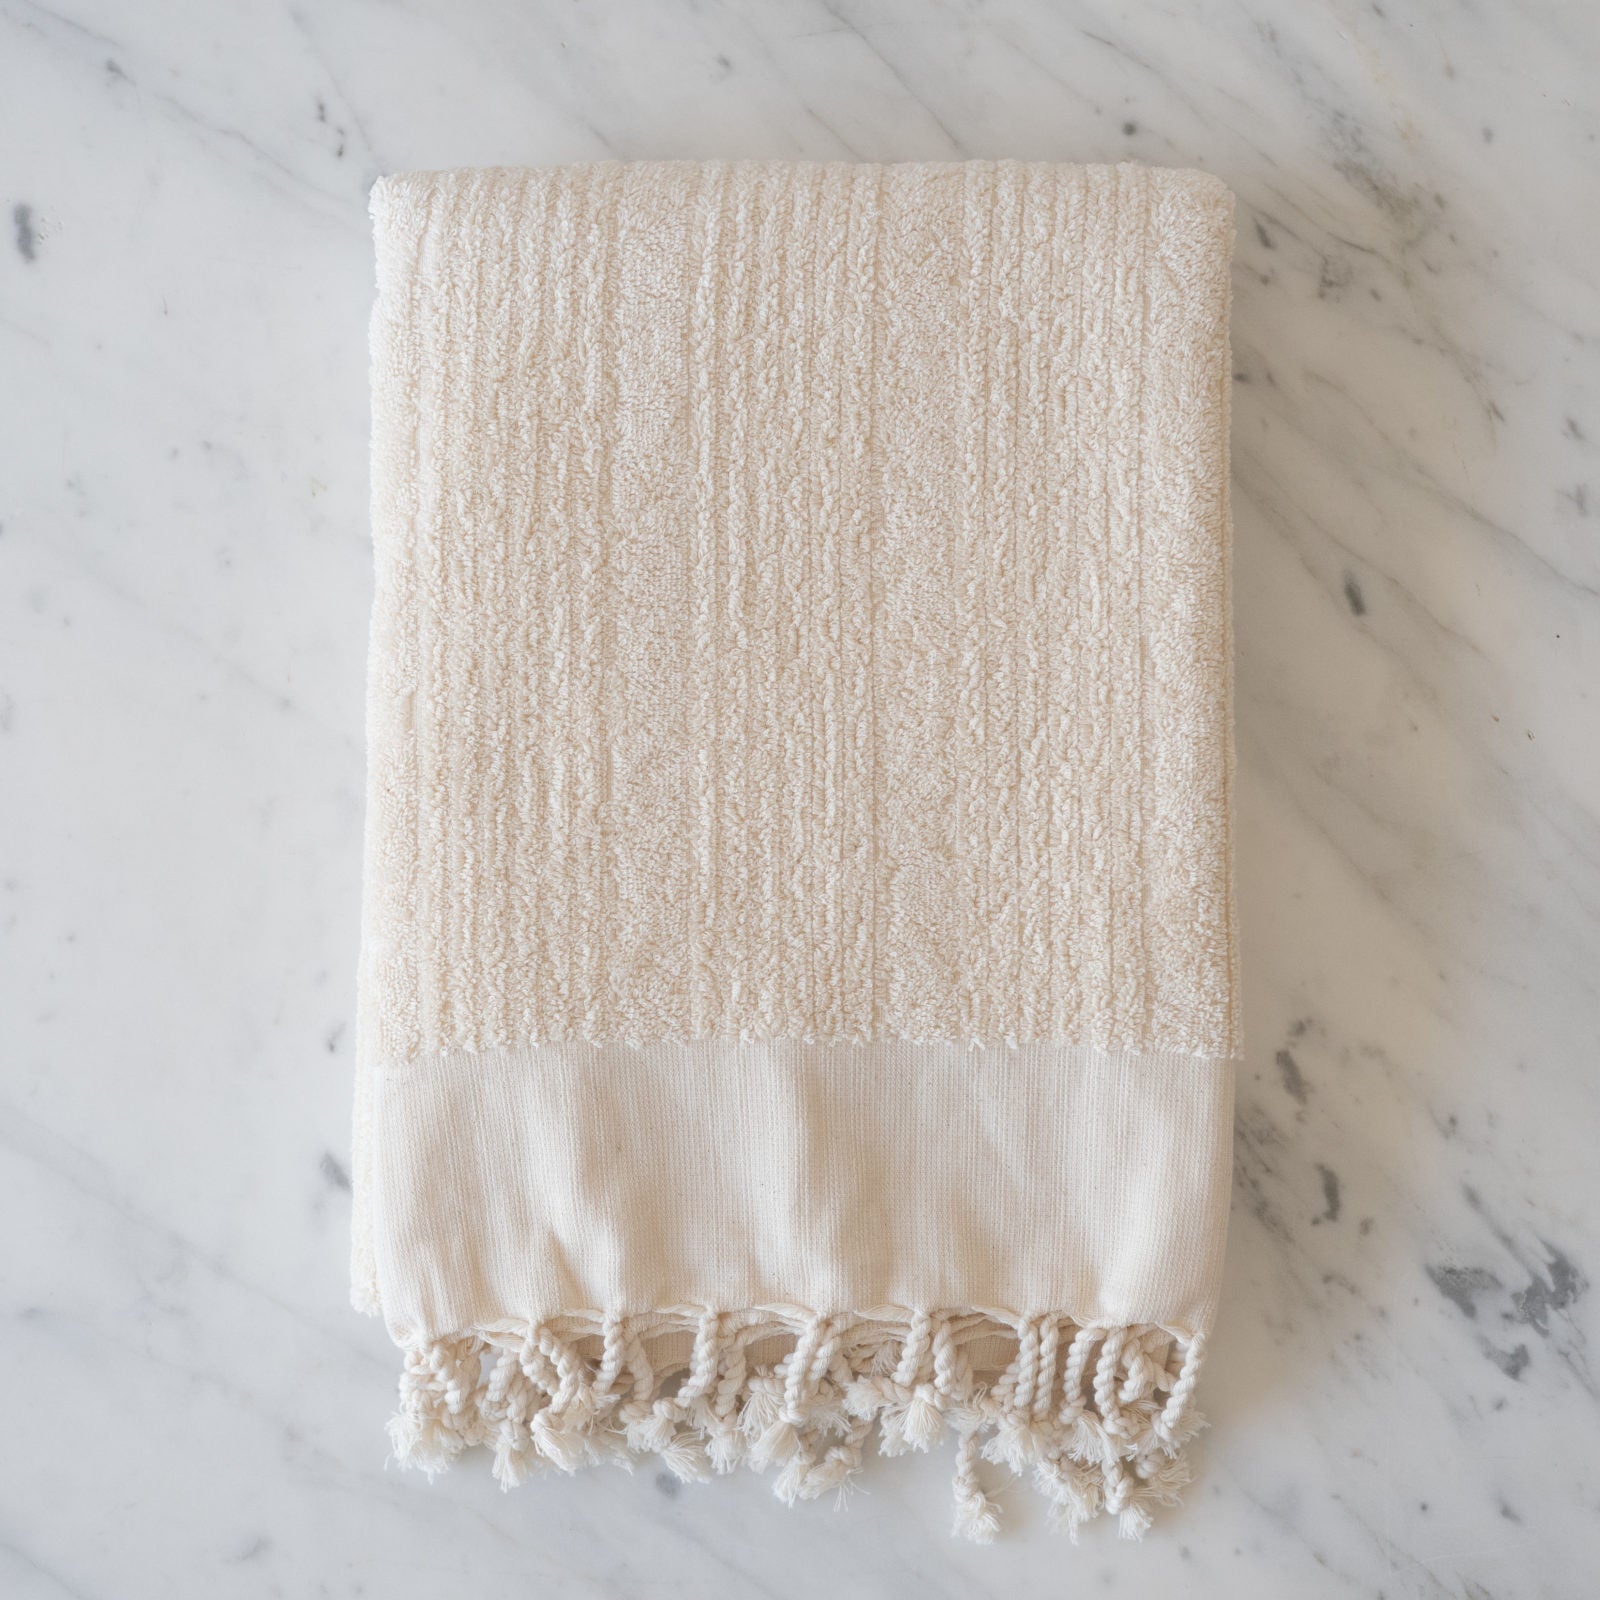 JUNE Handwoven Cotton Towel - Striped